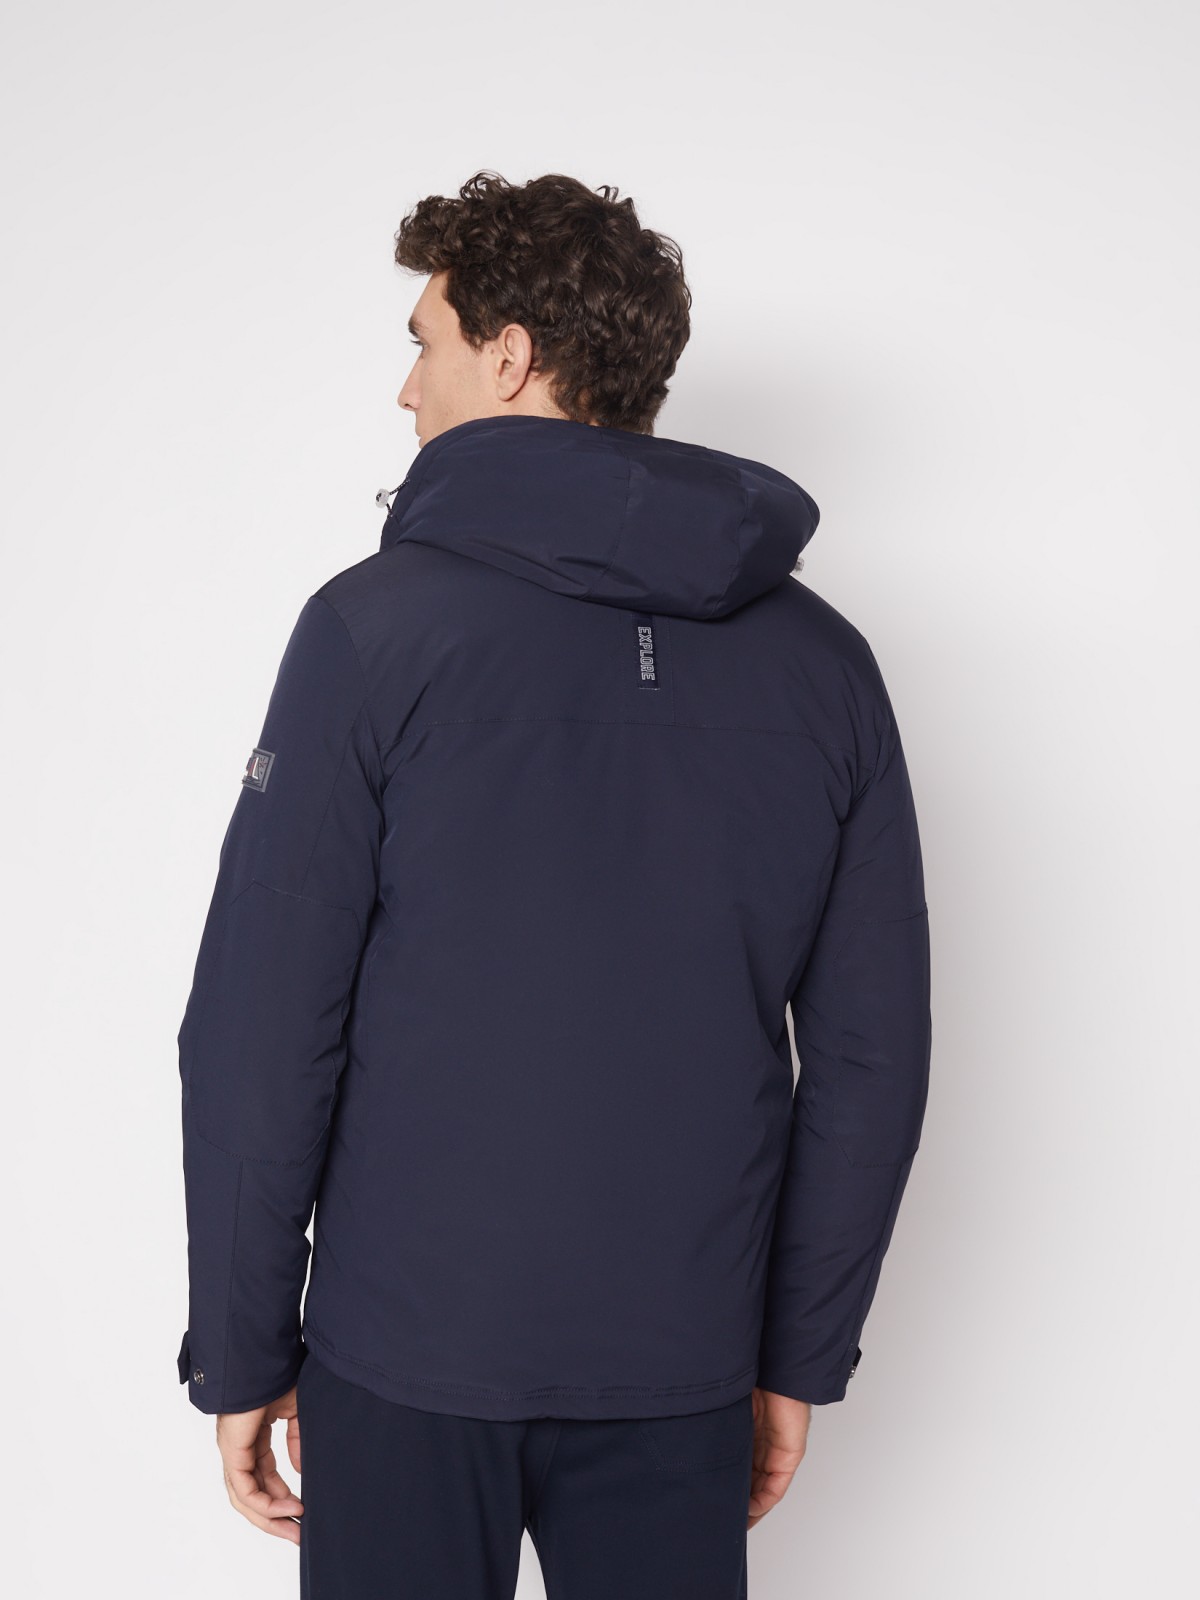 Утеплённая куртка с капюшоном zolla 012135102104, цвет темно-синий, размер M - фото 6